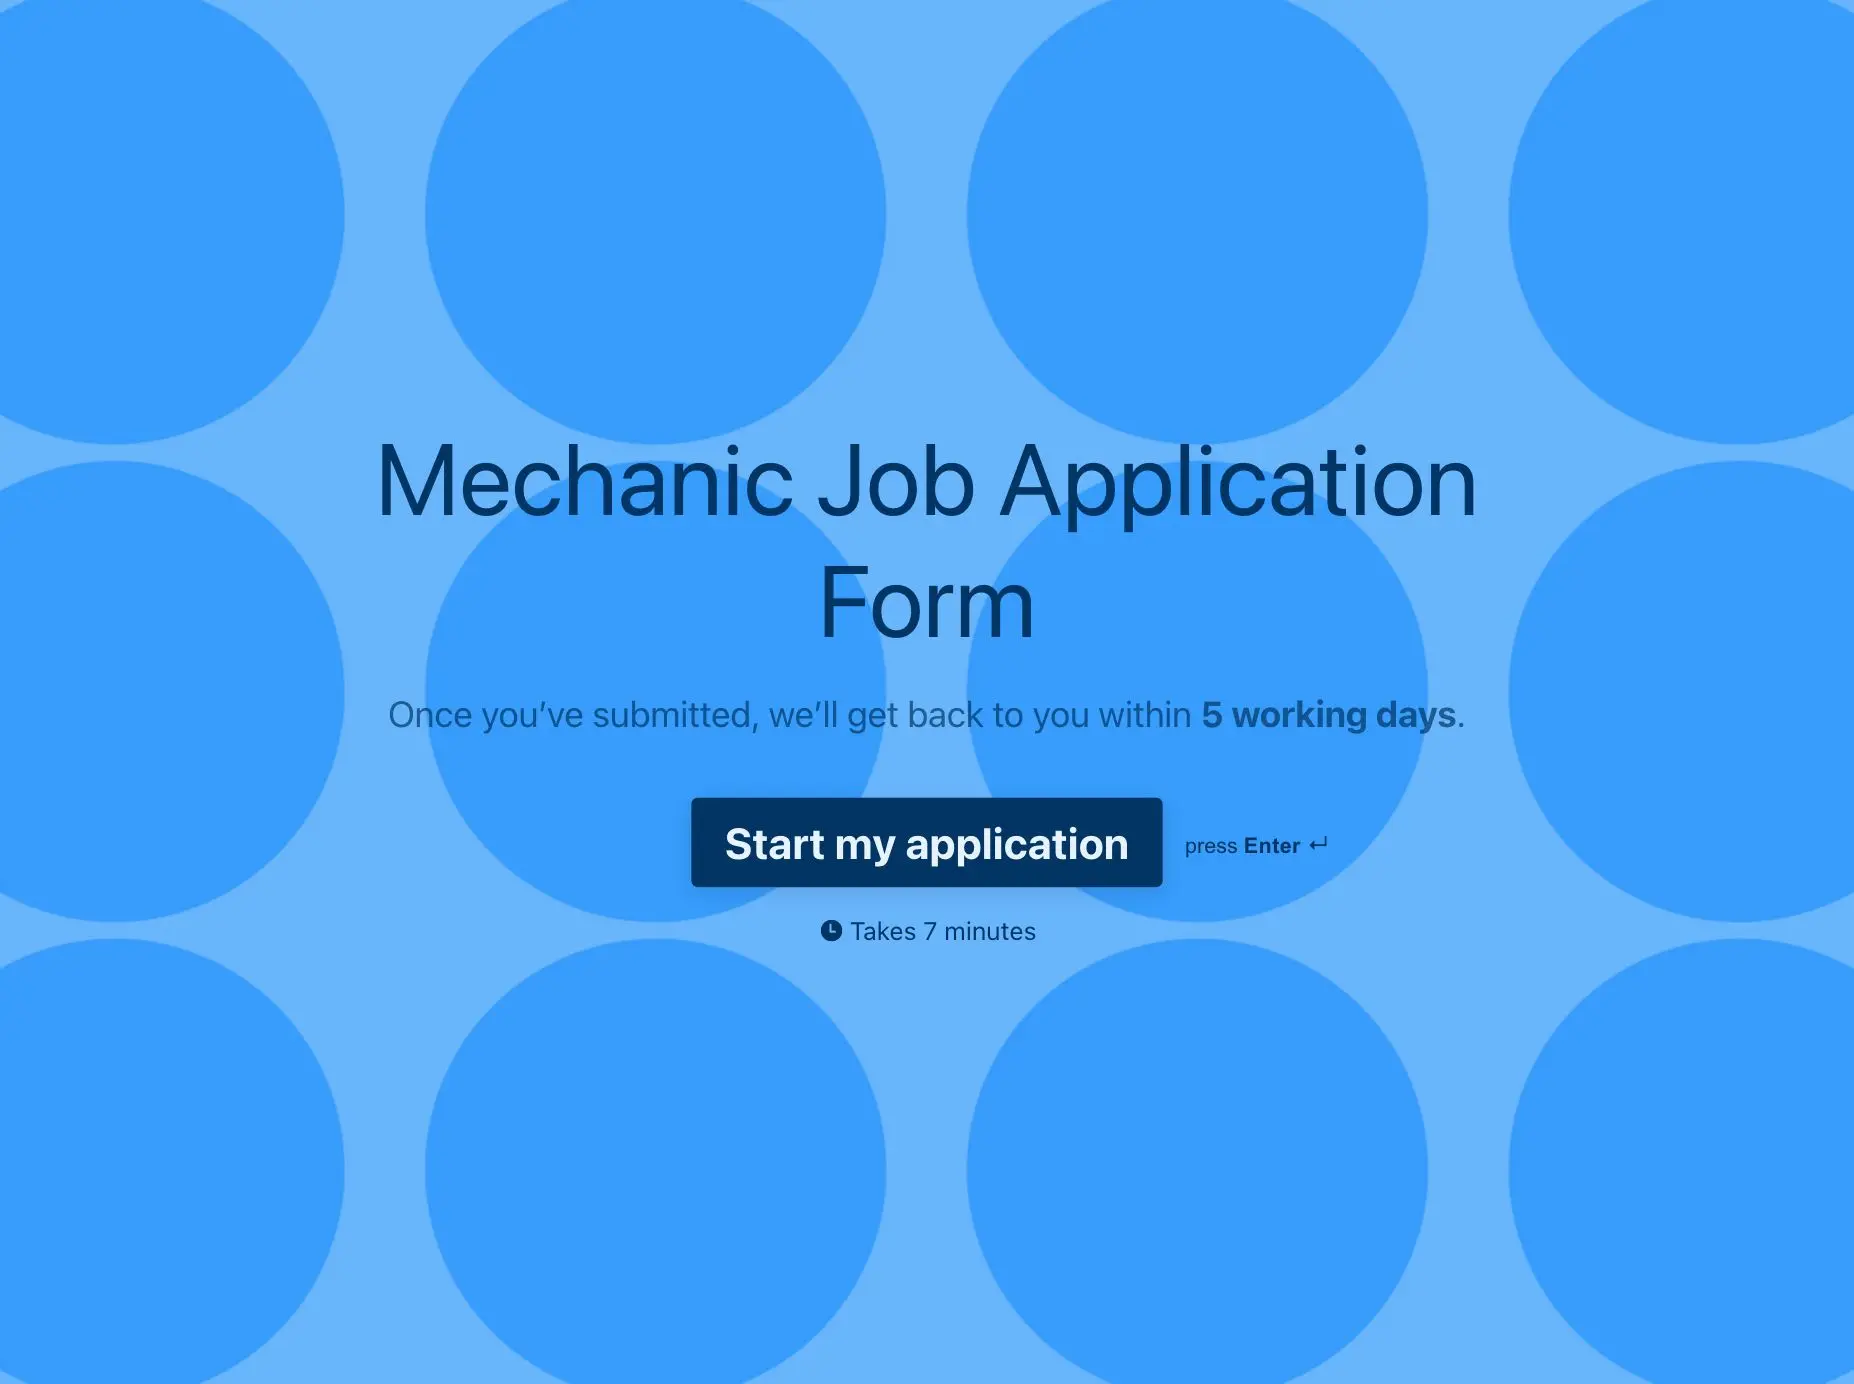 Mechanic Job Application Form Template Hero